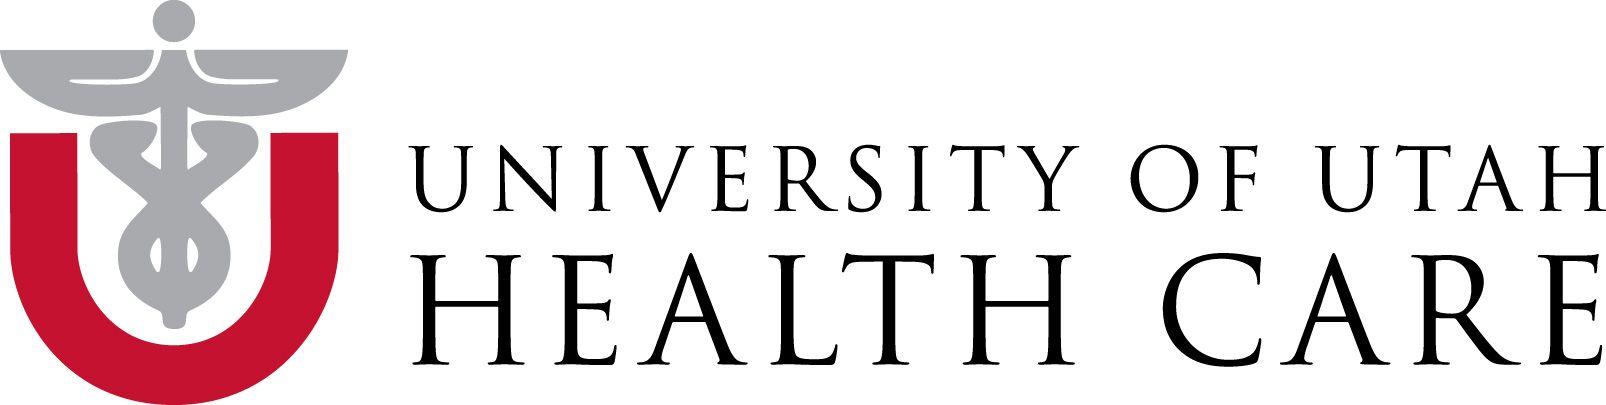 U of U Health Care Logo - Eccles Health Sciences Library Anniversary Celebration | School of ...